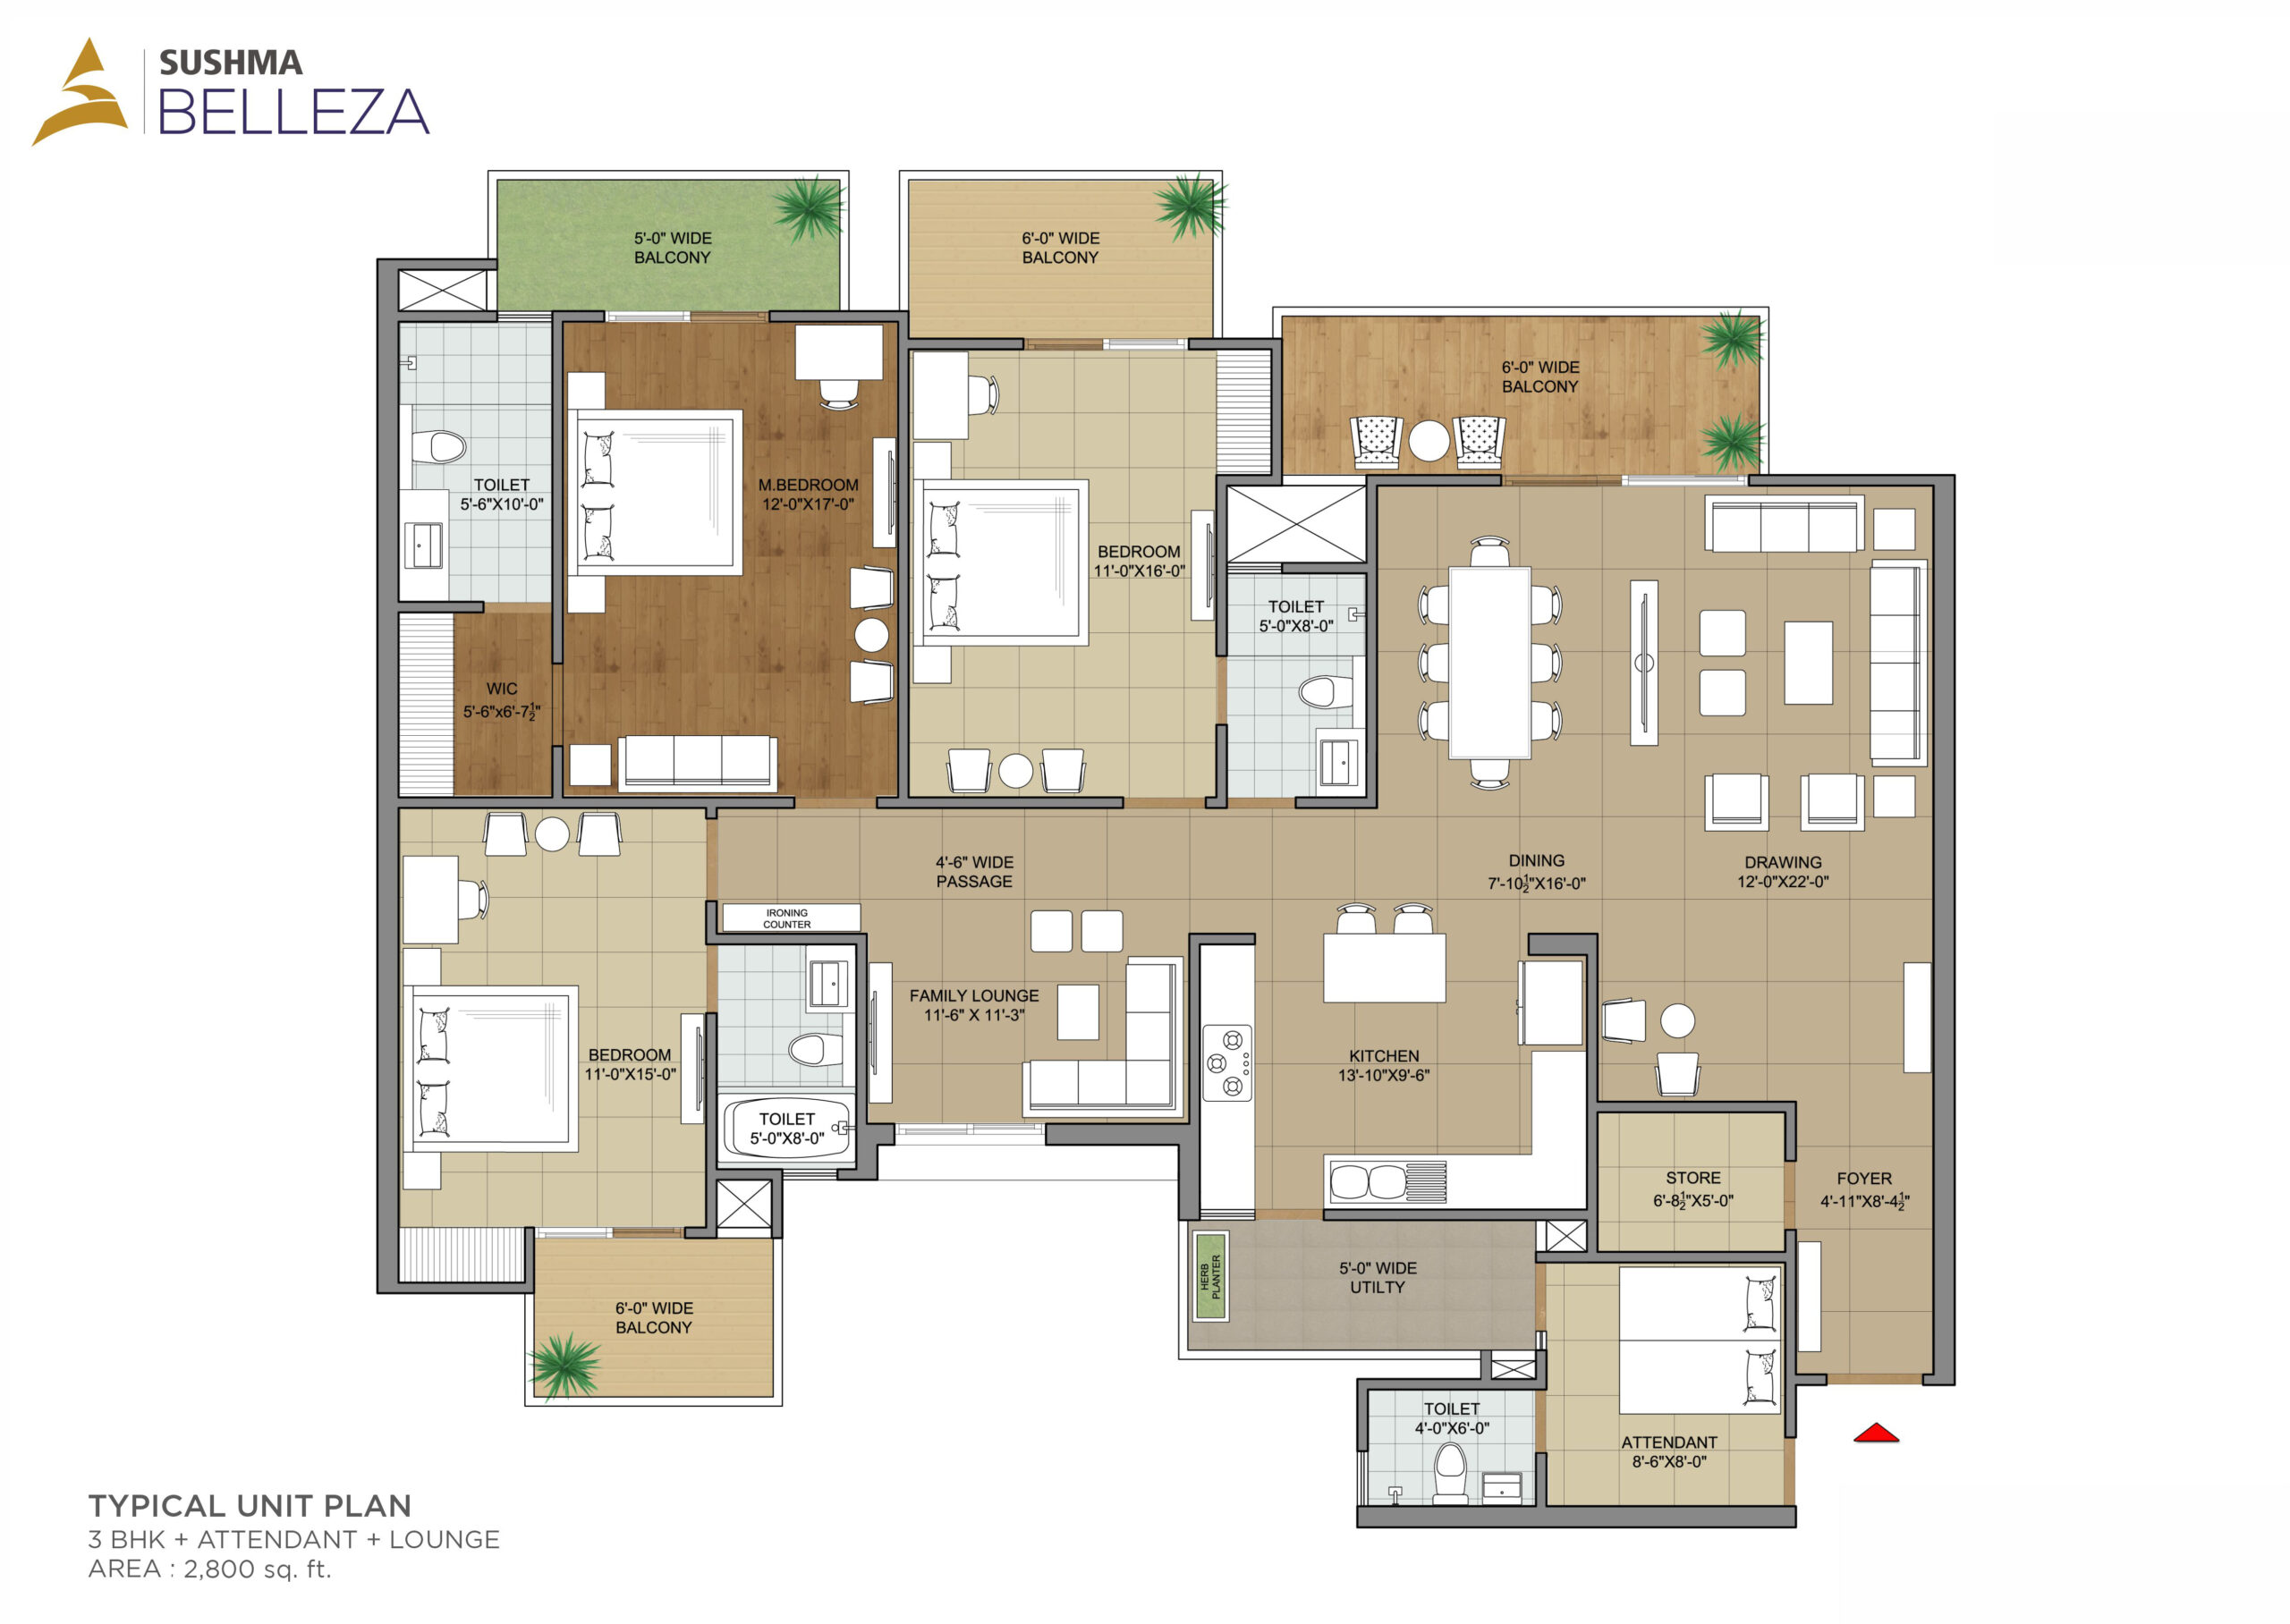 Sushma Belleza Unit Plan 2800 sq.ft.